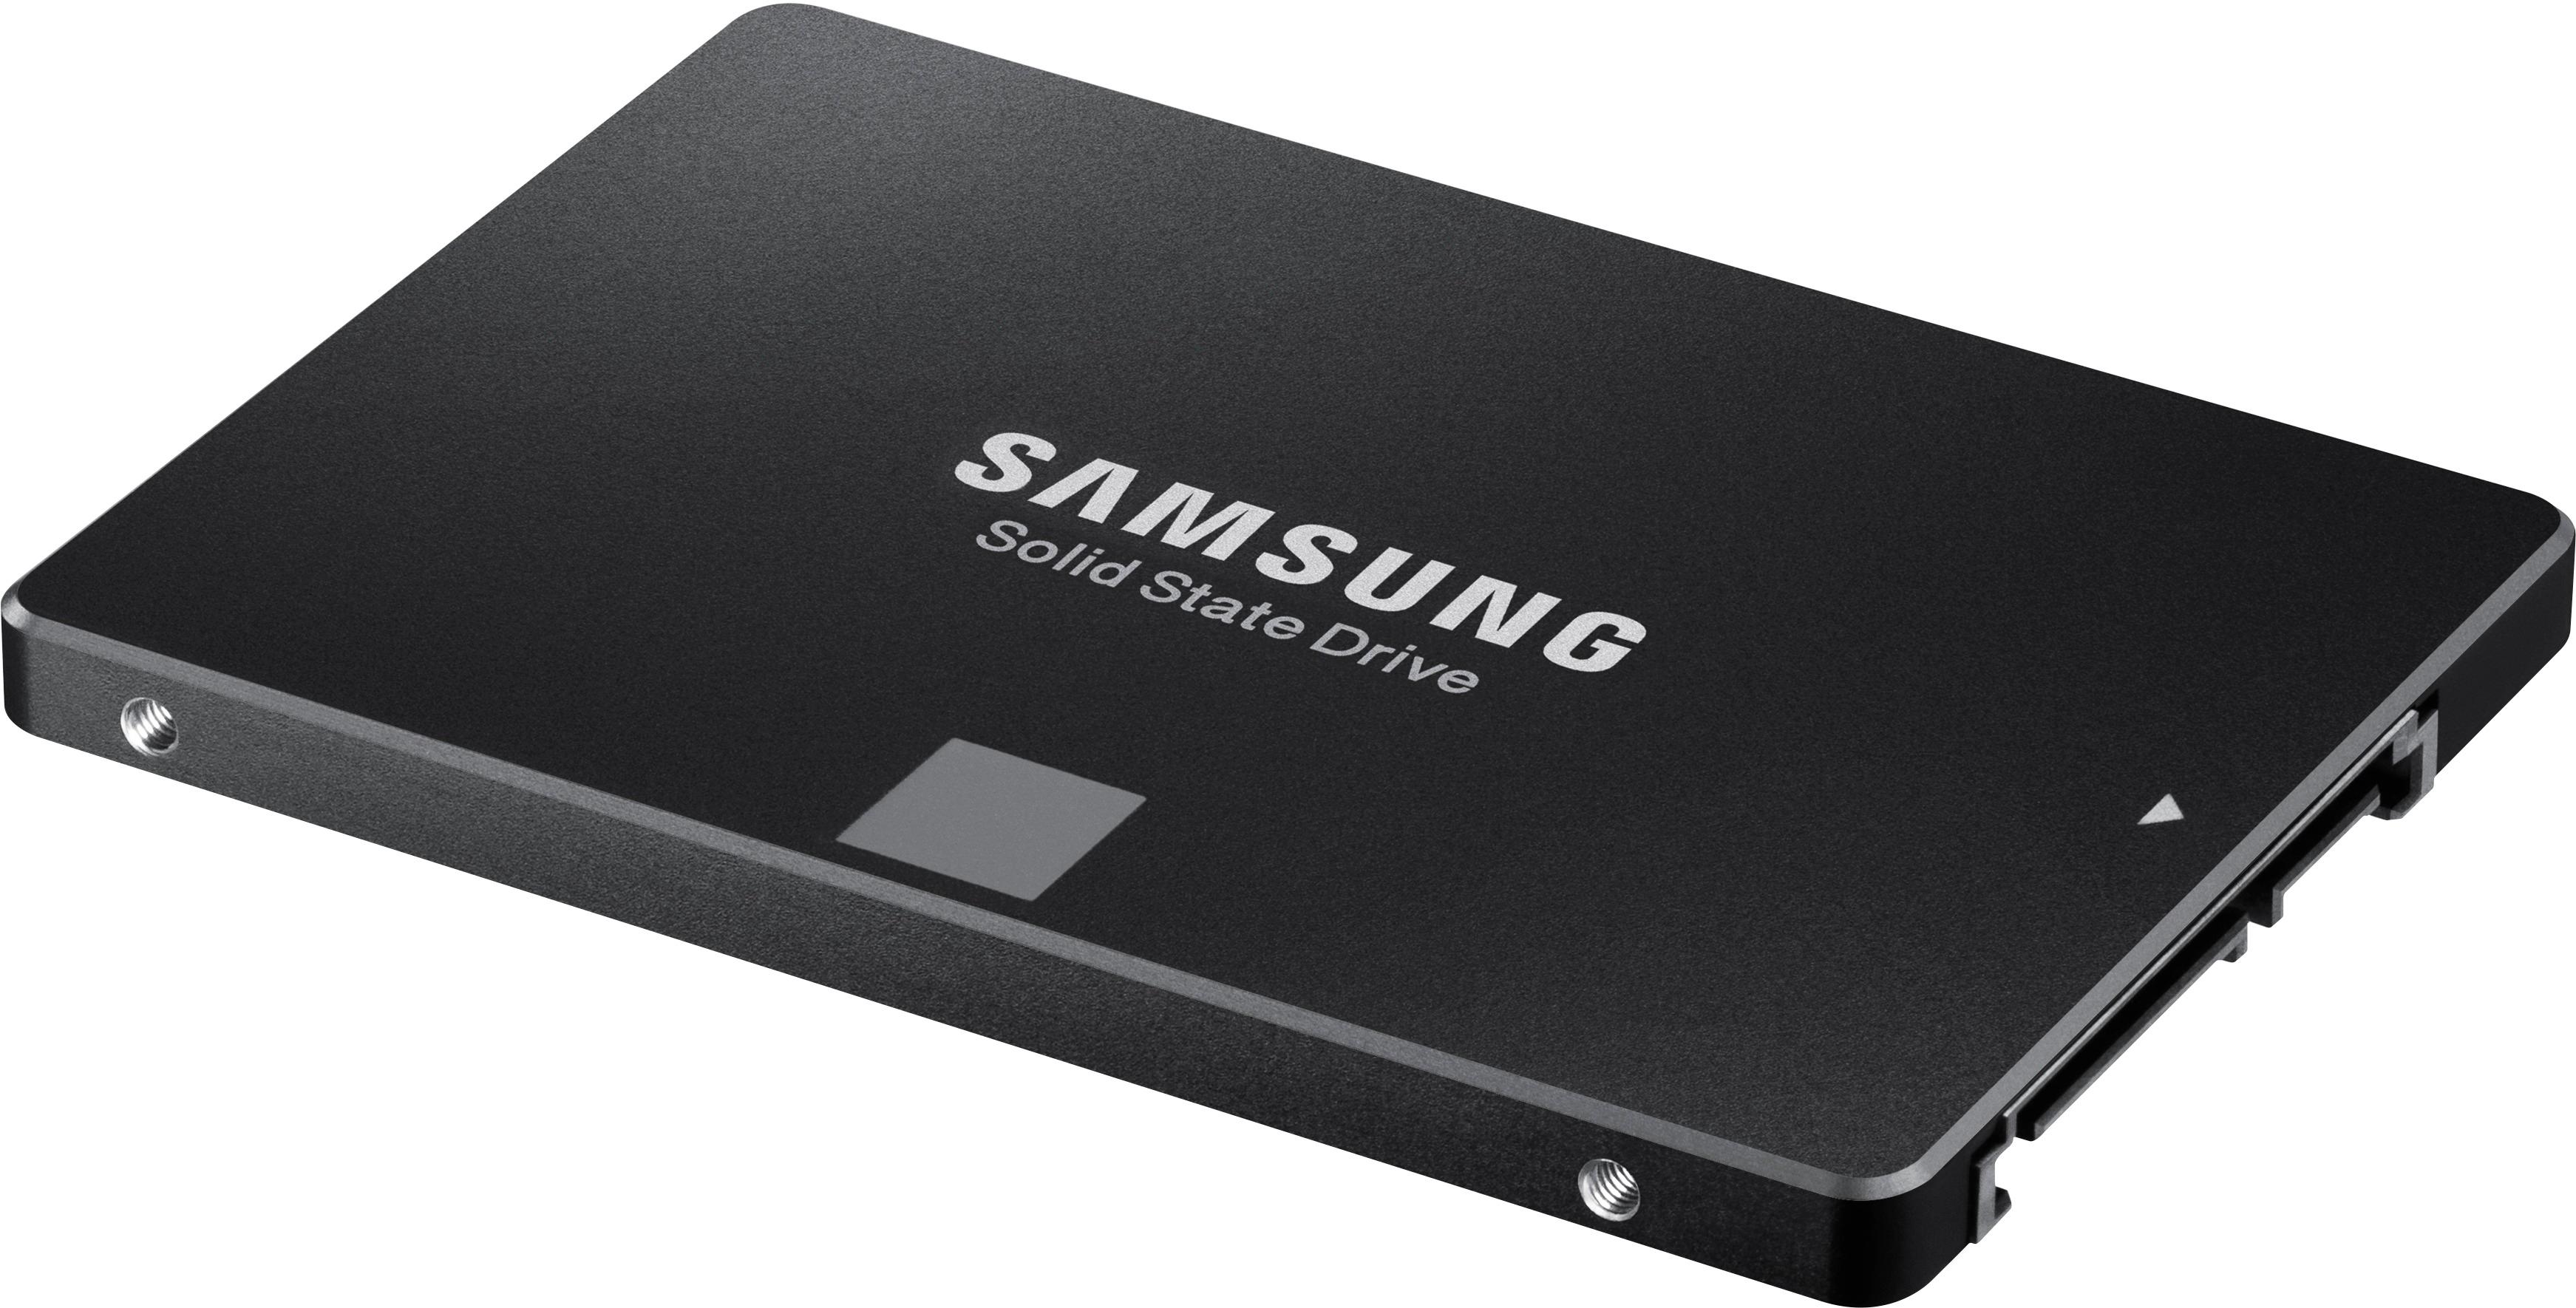 Memory Management Train Best Buy: Samsung 860 EVO 250GB Internal SATA 2.5" Solid State Drive  MZ-76E250B/AM